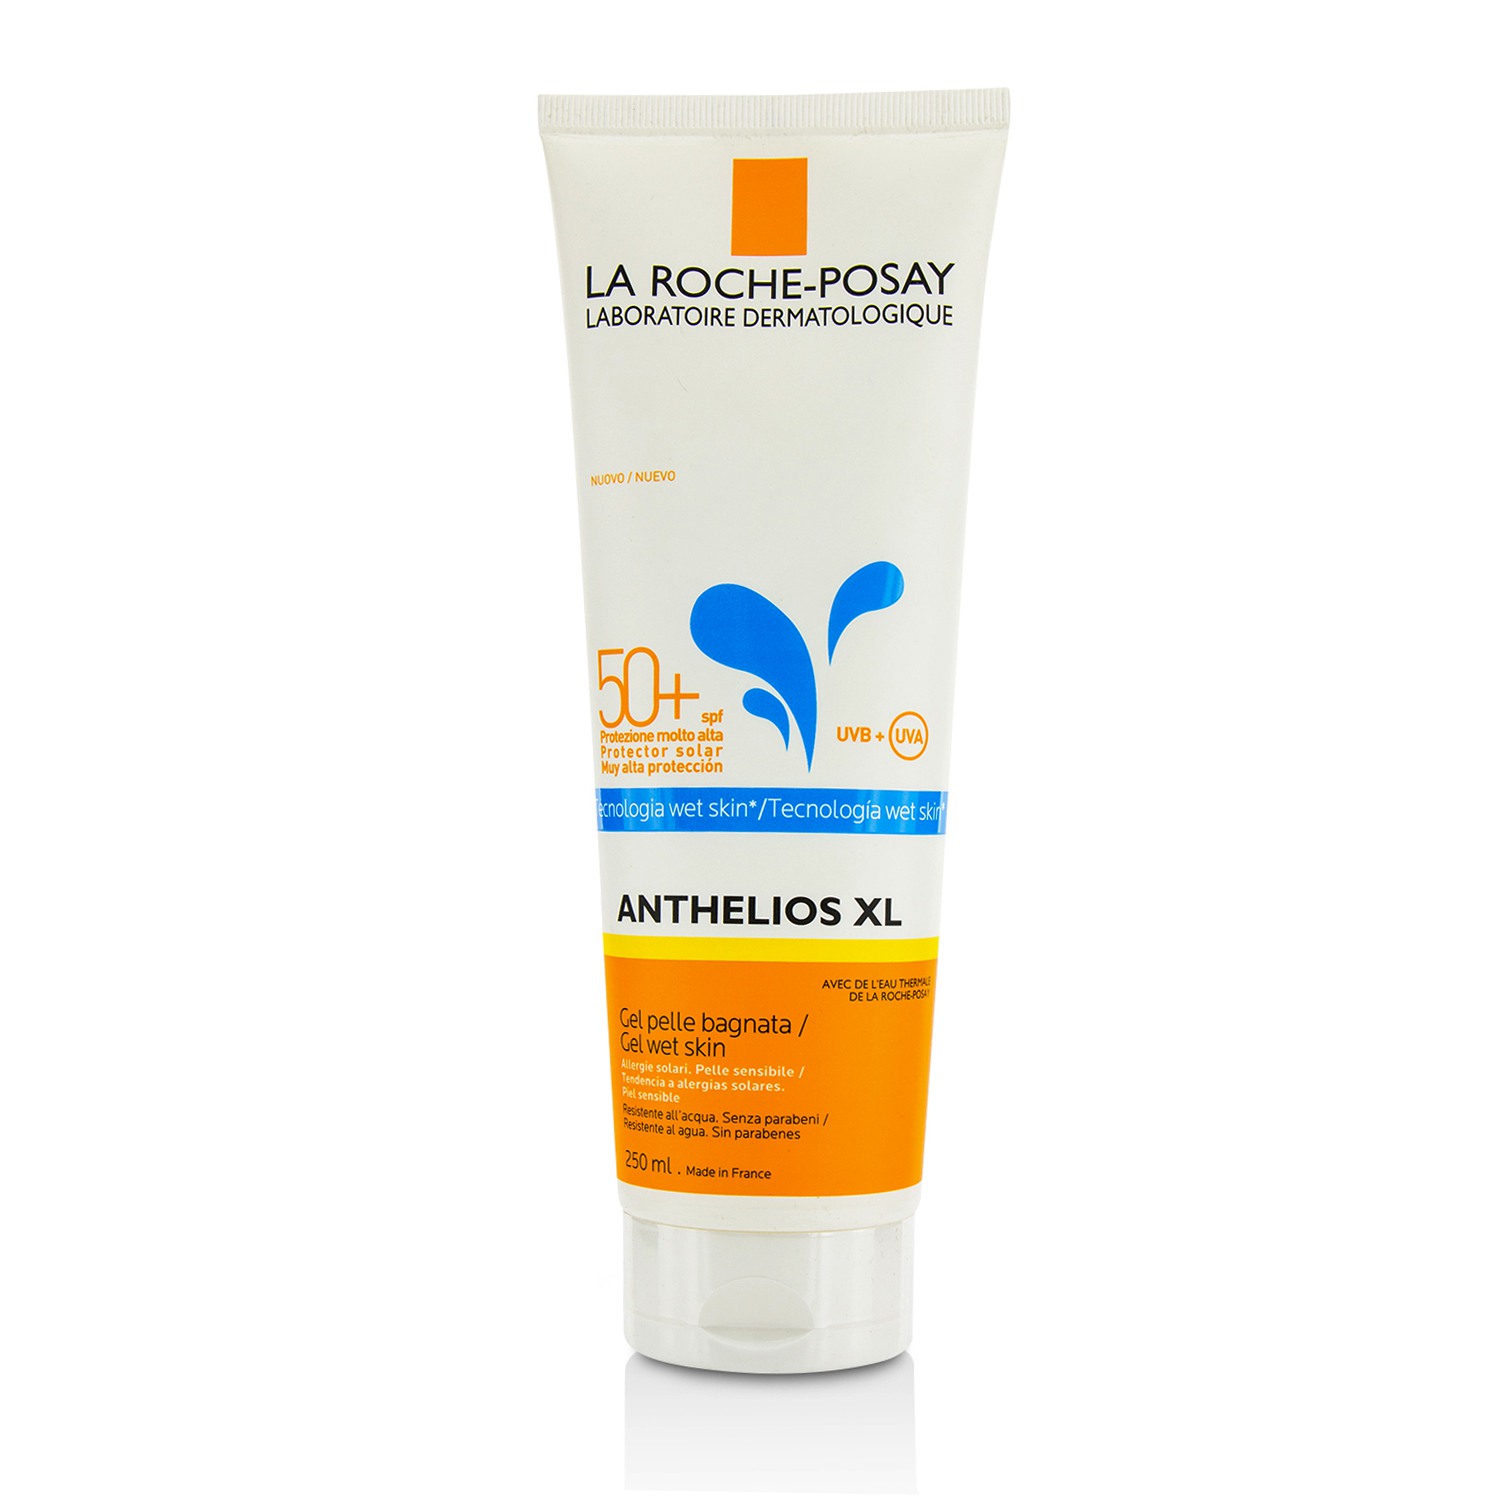 Anthelios XL Wet Skin Gel SPF 50+ La Roche Posay Image